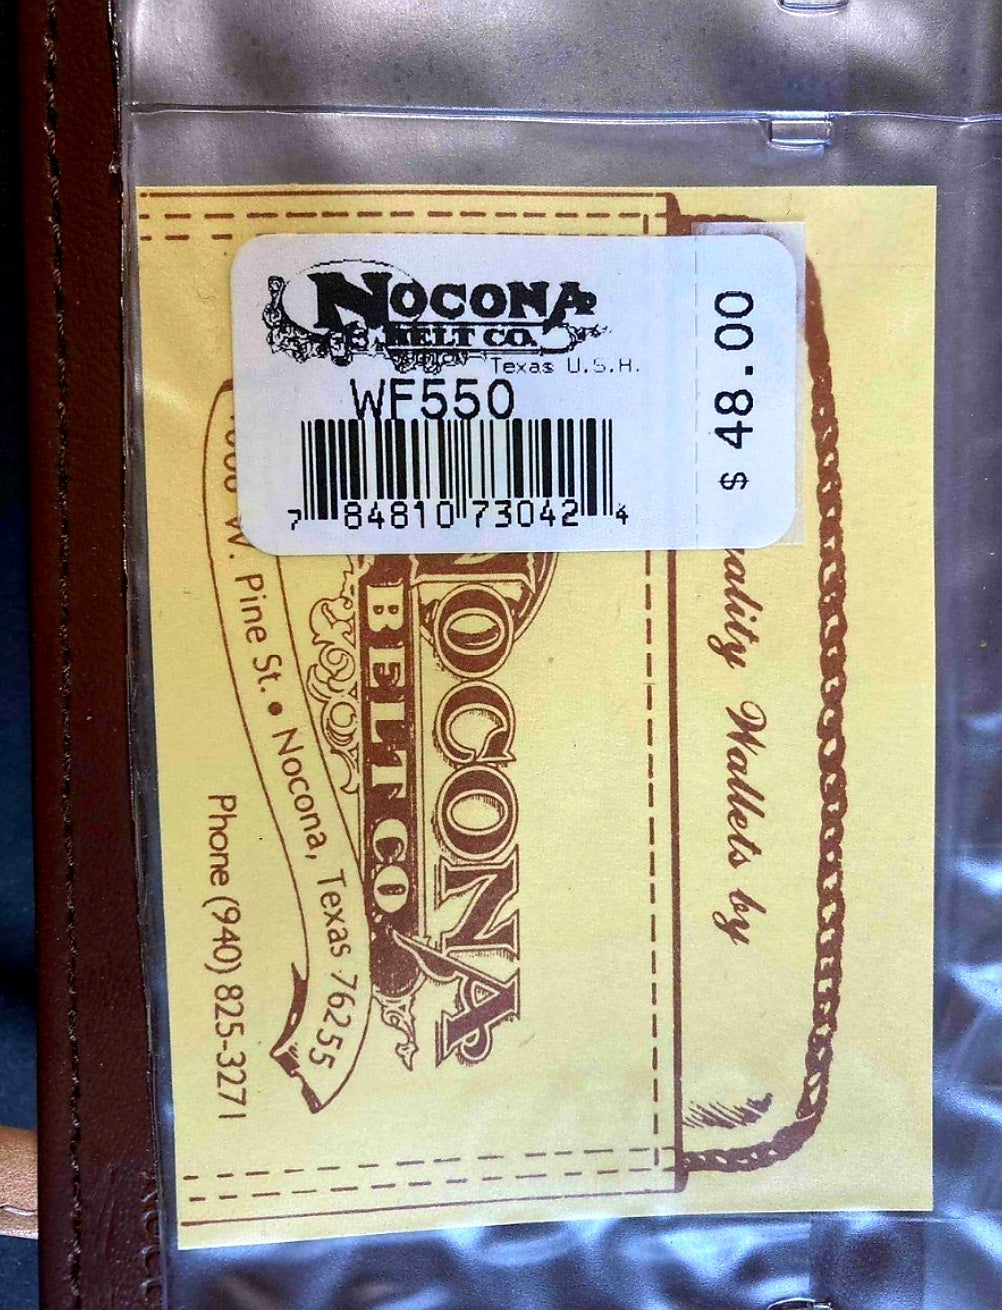 NEW *Western NOCONA Cross Body Leather Bag Purse